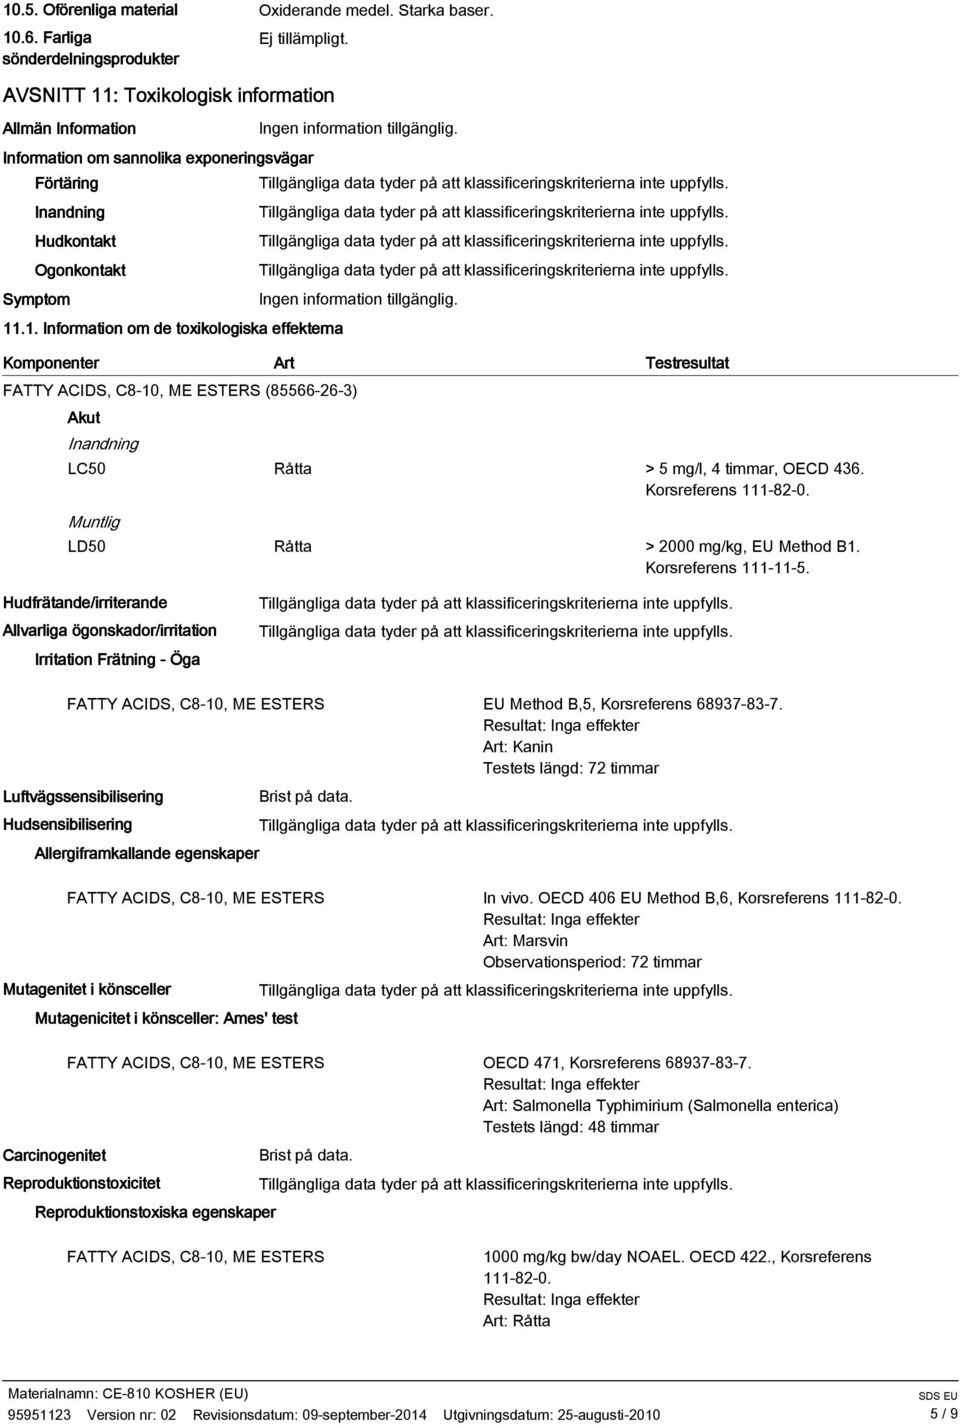 Korsreferens 111-82-0. Muntlig LD50 Råtta > 2000 mg/kg, EU Method B1. Korsreferens 111-11-5.